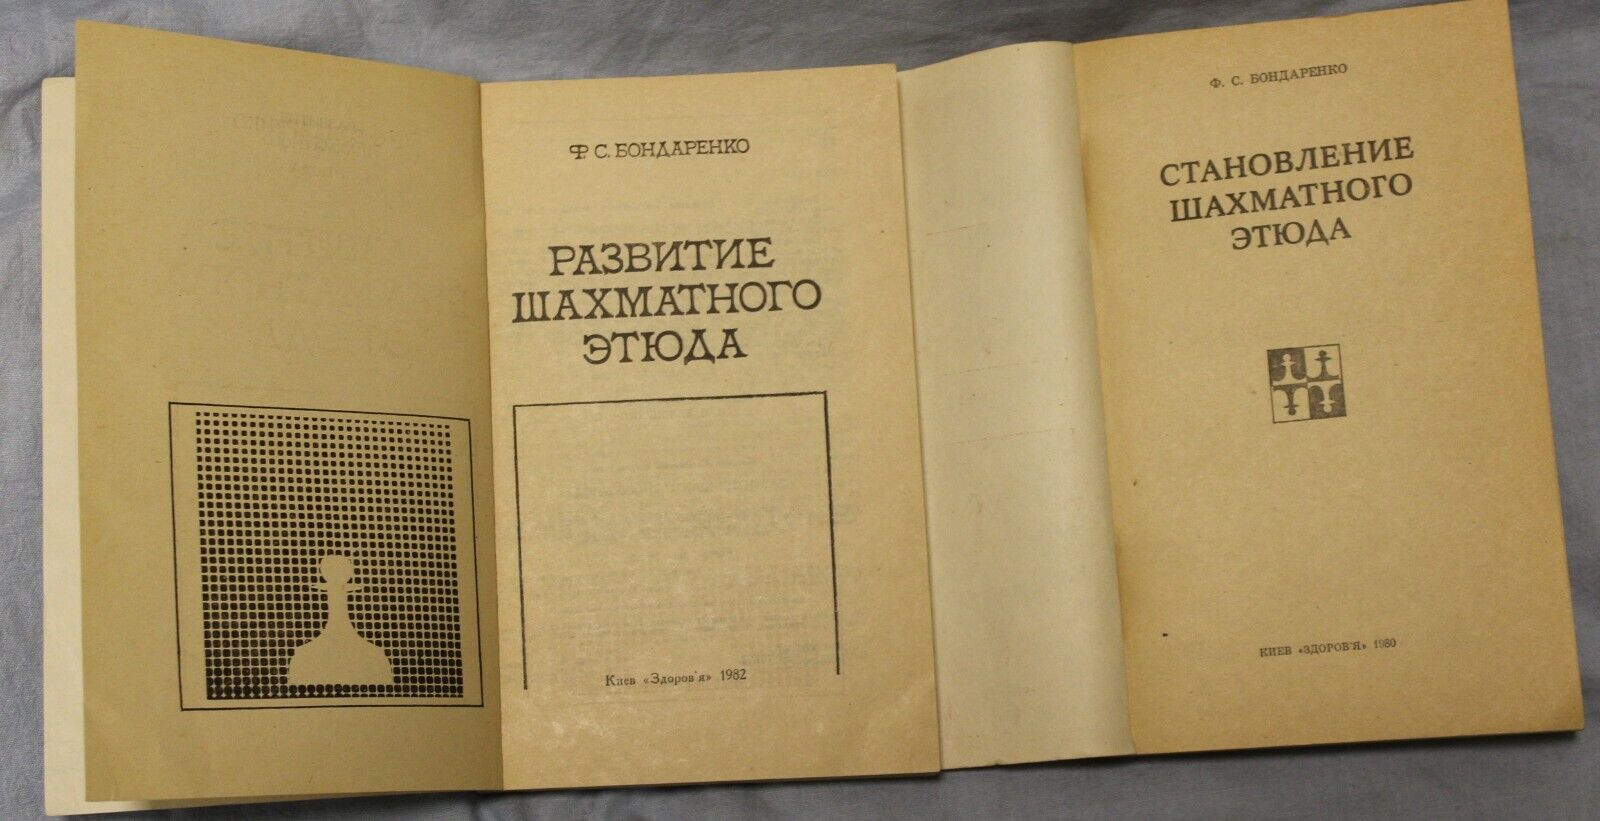 10737.4 Soviet chess books on chess study by F. Bondarenko Арт Мн